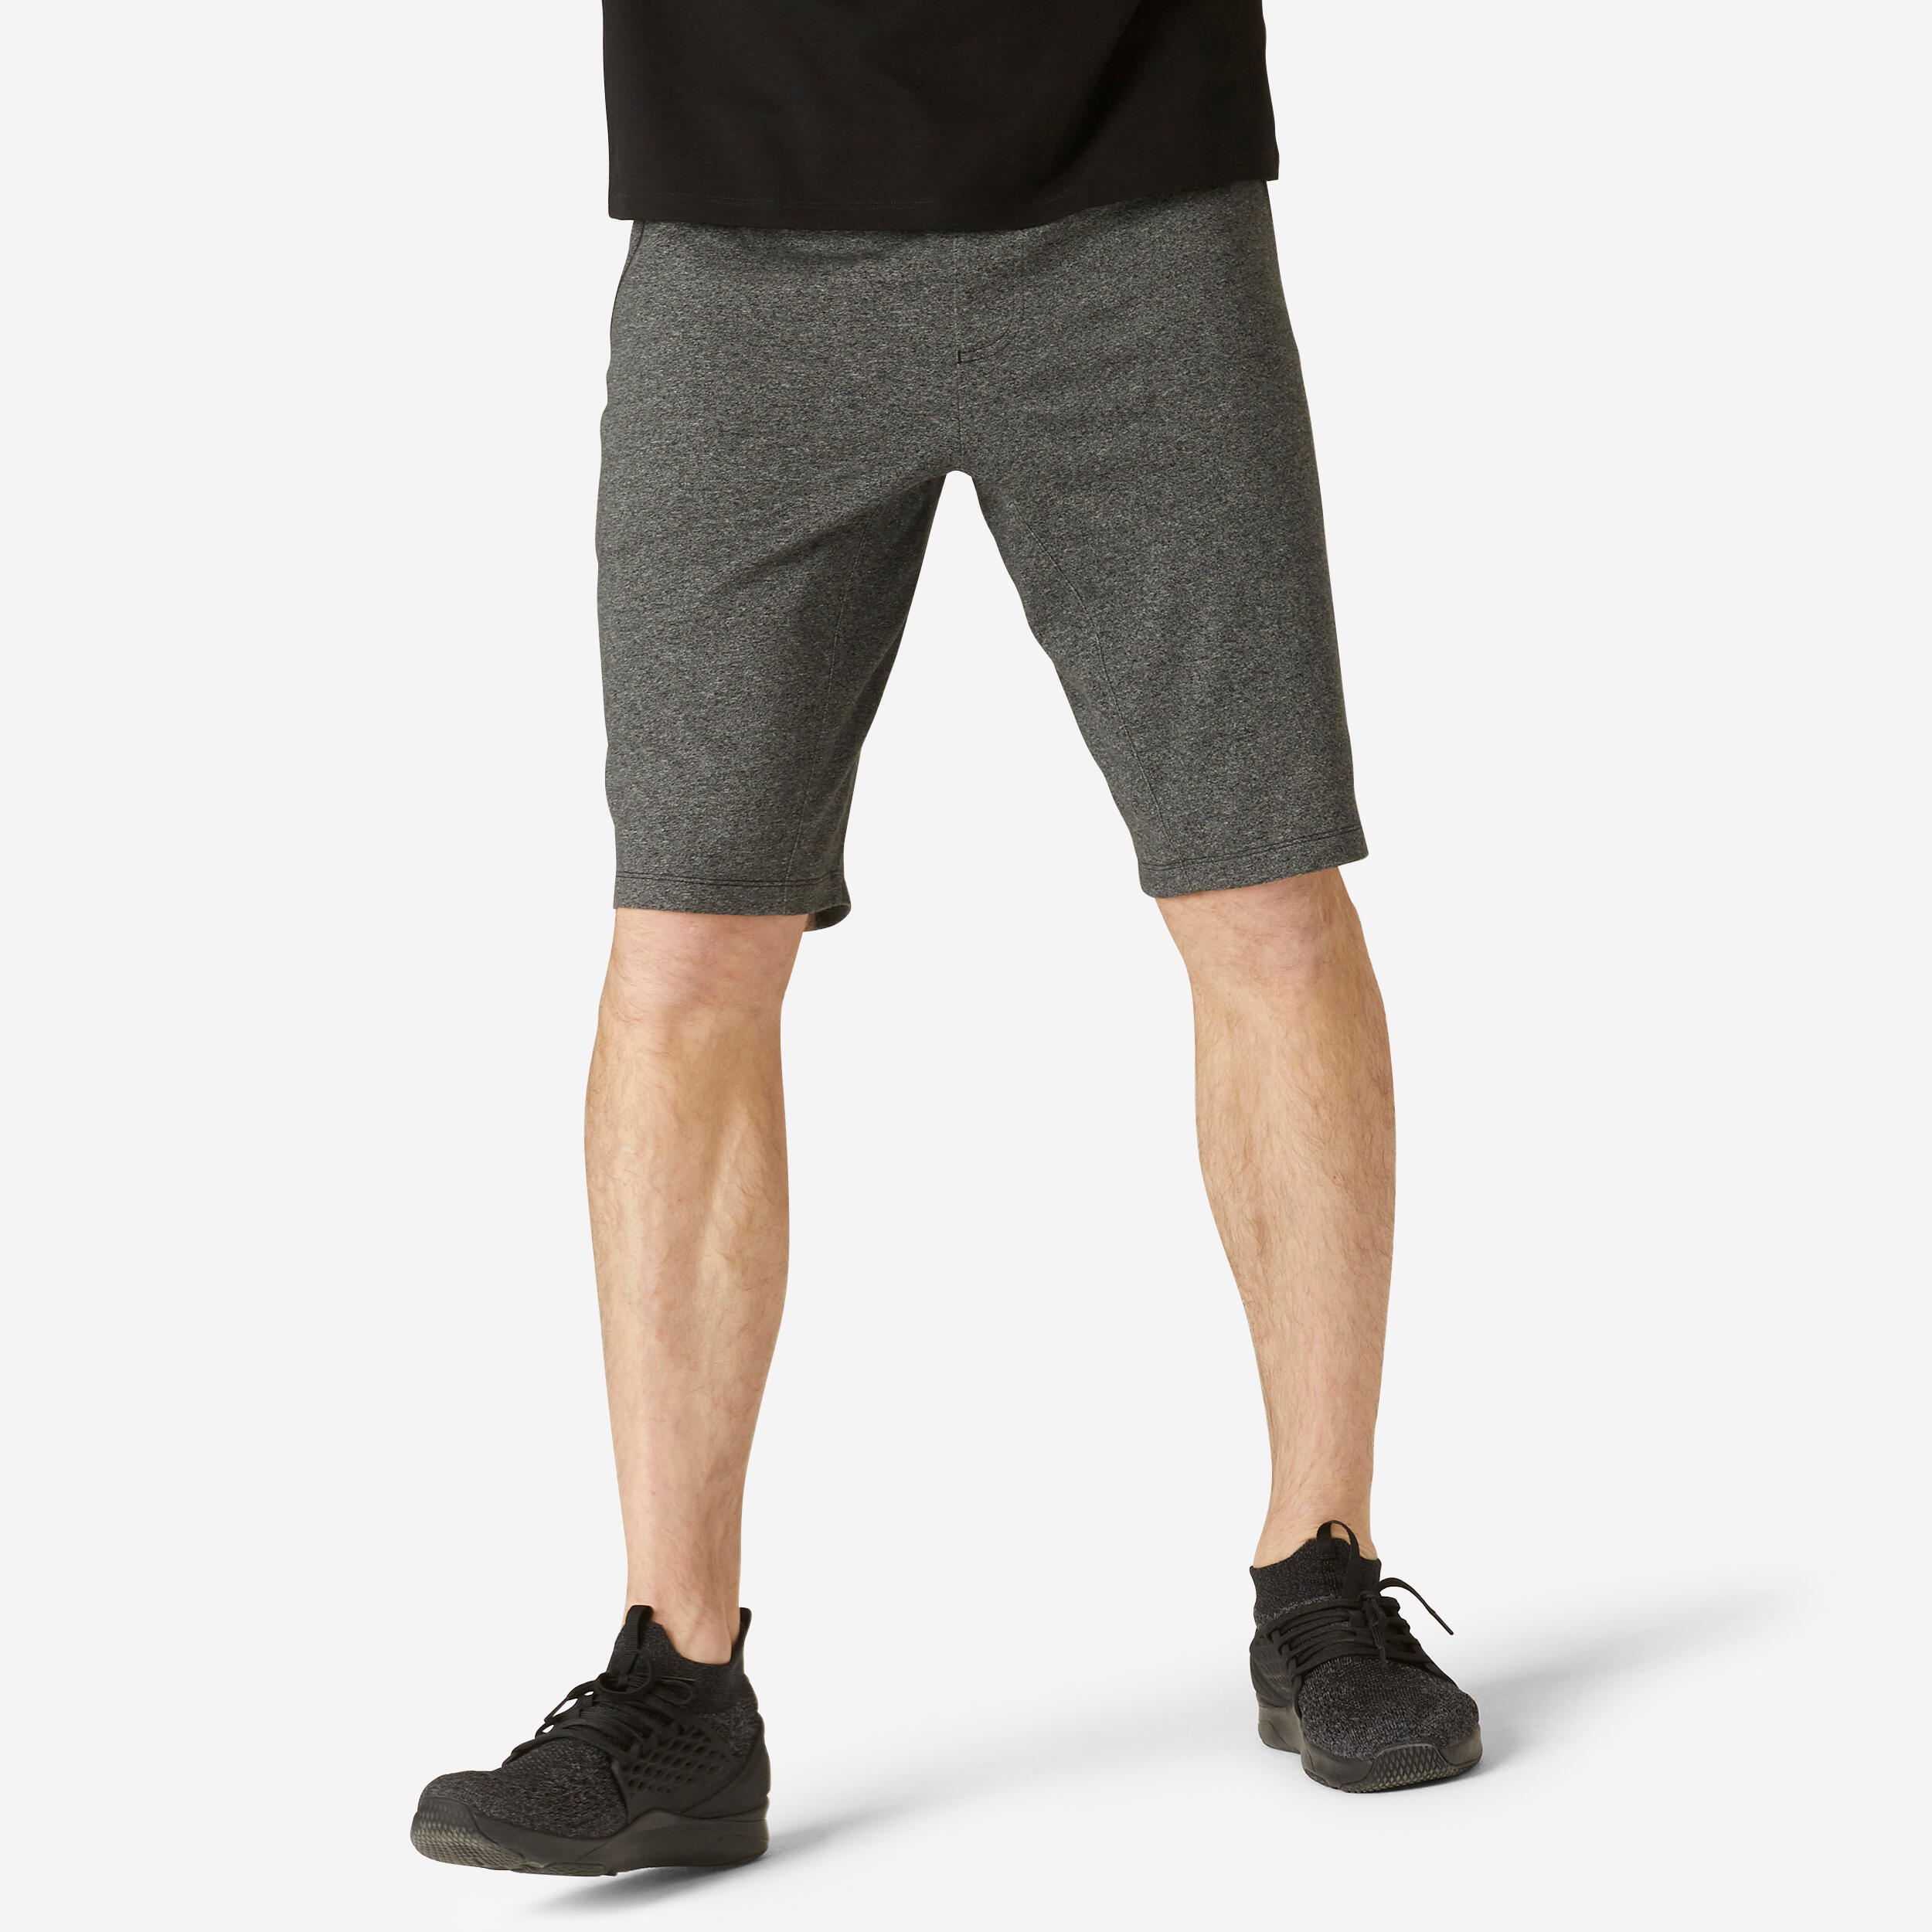 Men’s Fitness Shorts with Zipped Pockets